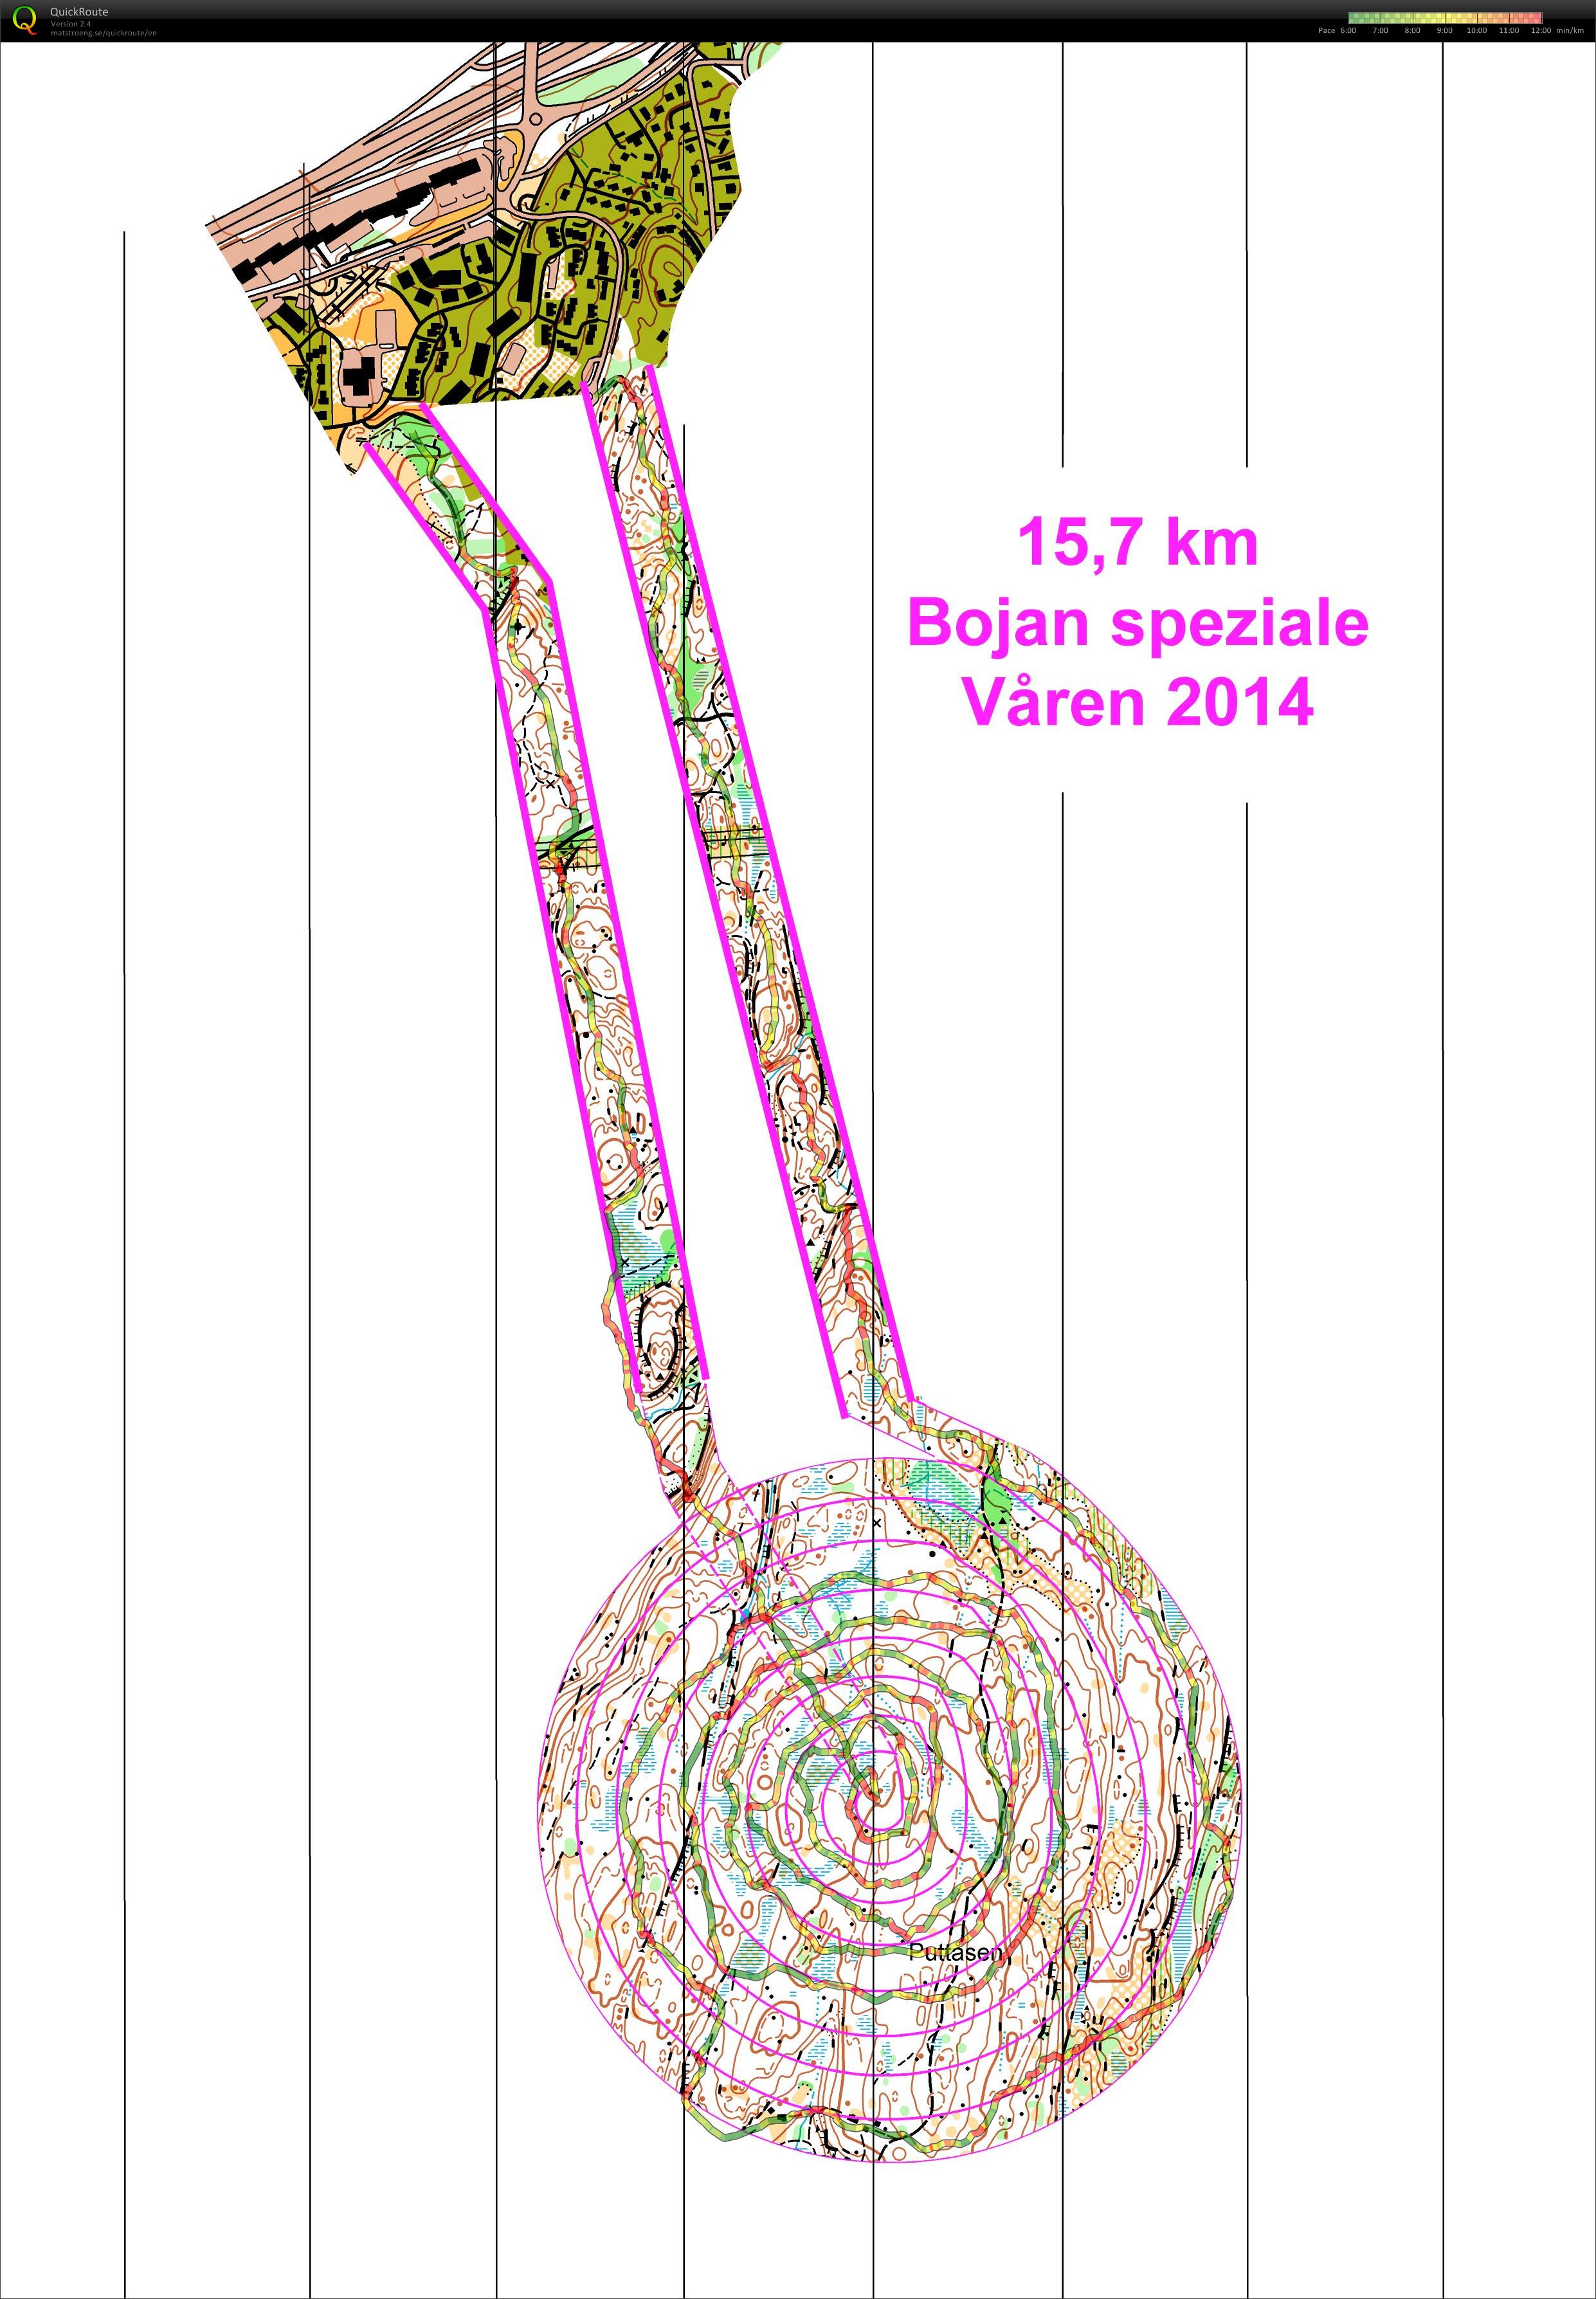 Bojan speziale (01.04.2014)